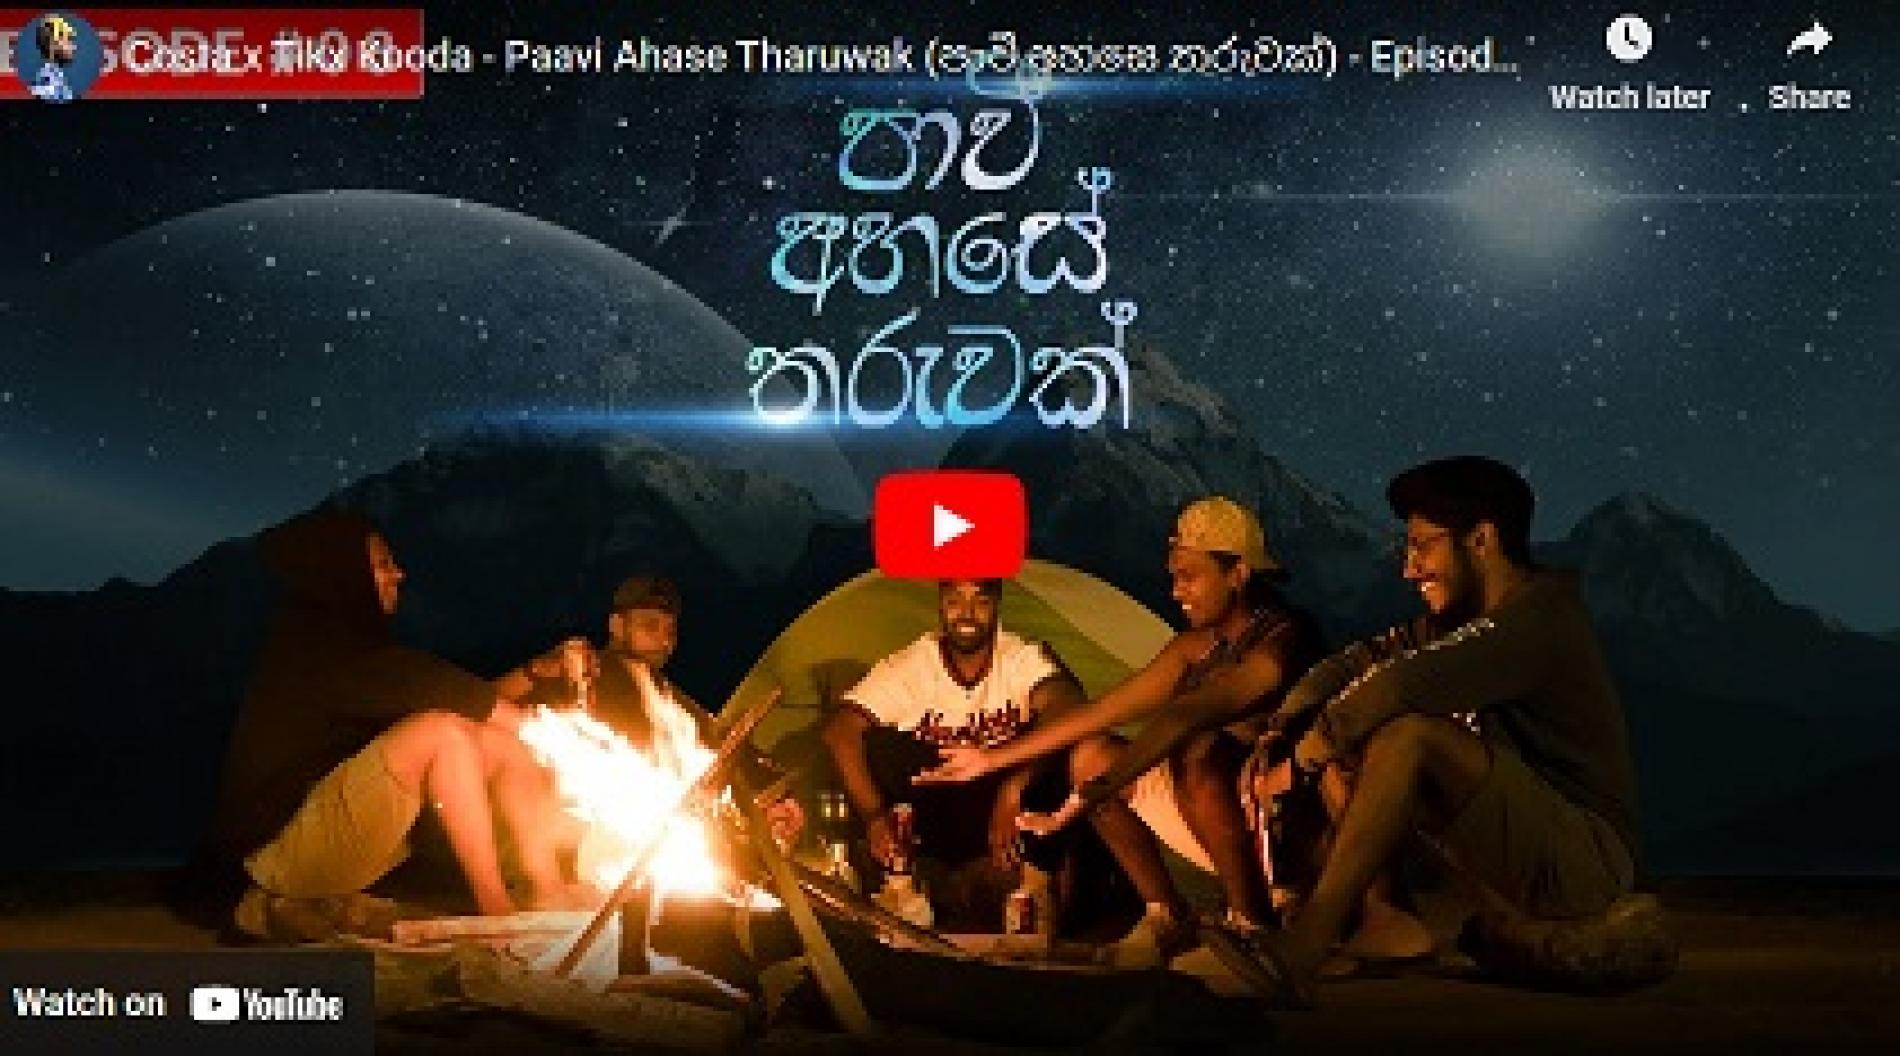 New Music : Costa x Tikx Kooda – Paavi Ahase Tharuwak (පාවී අහසෙ තරුවක්) – Episode 08